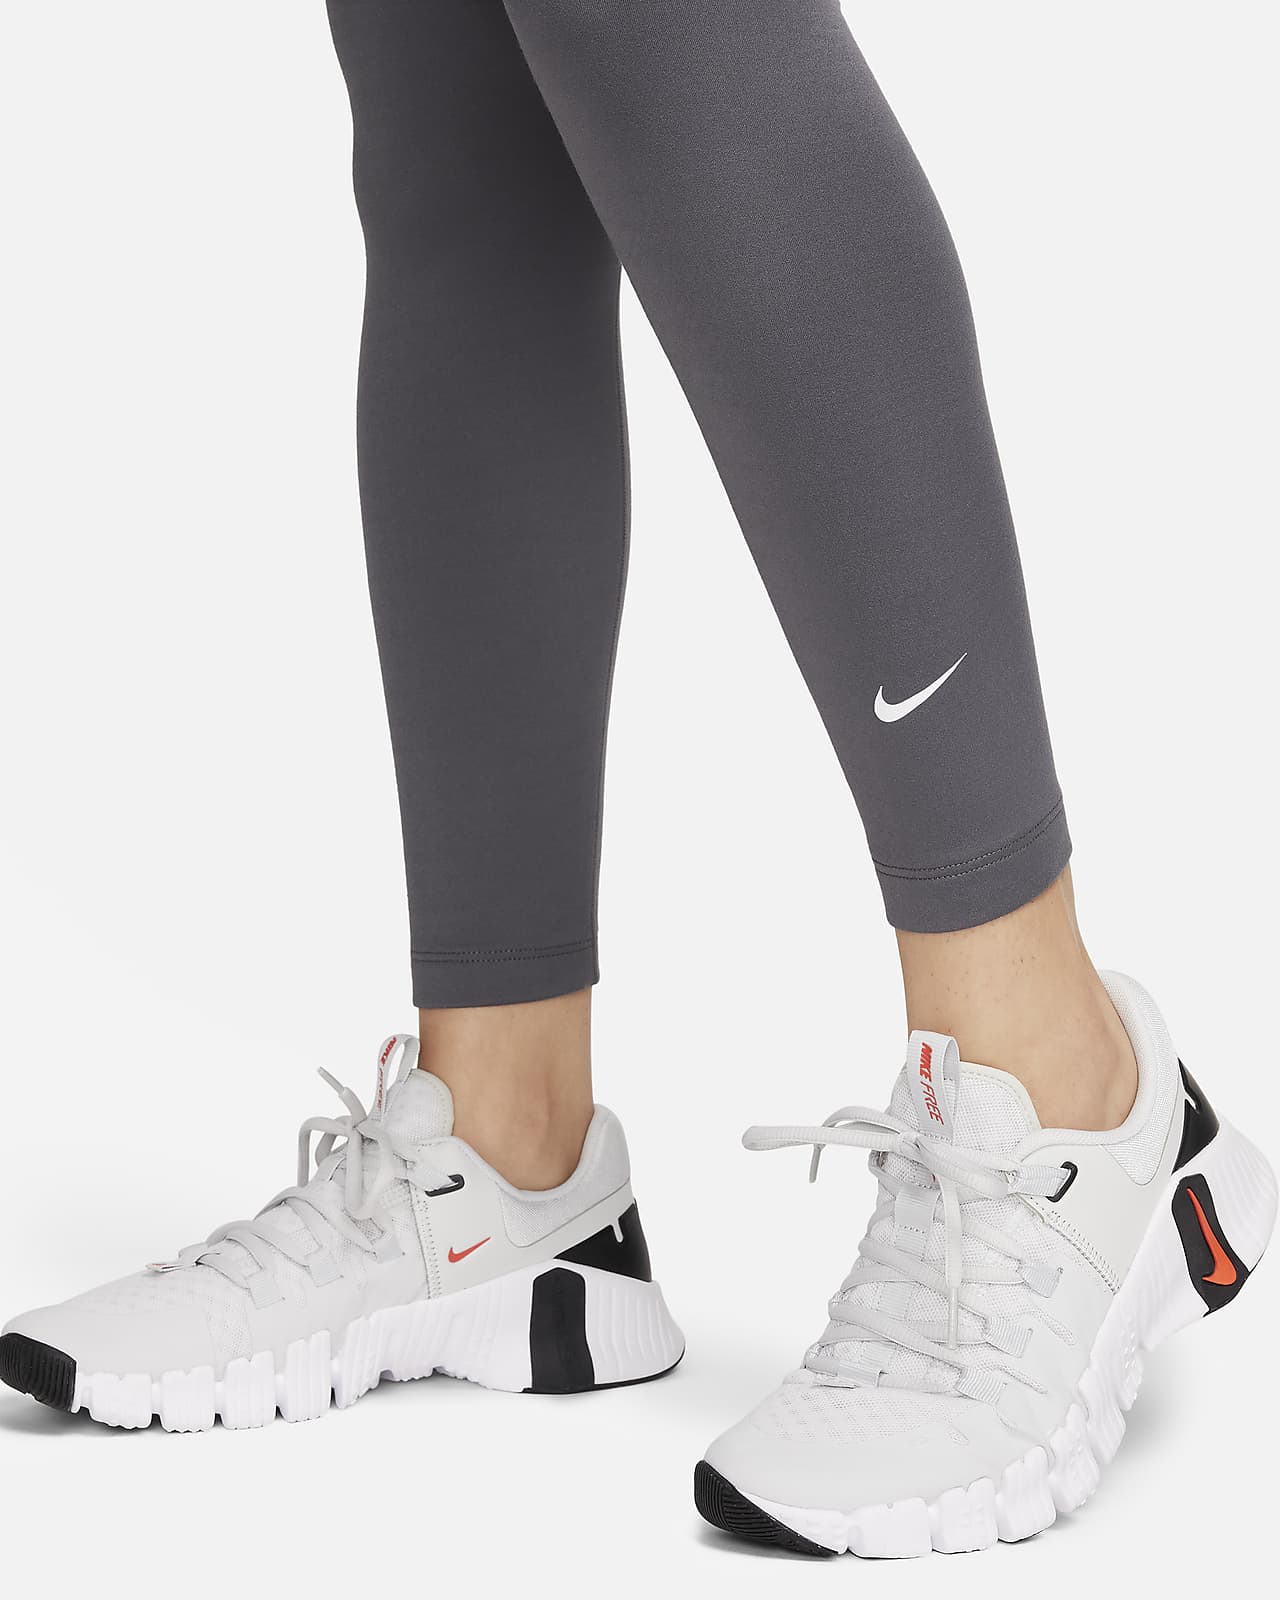 Nike Women's Fall High Rise 7/8 Tight - Running Warehouse Europe